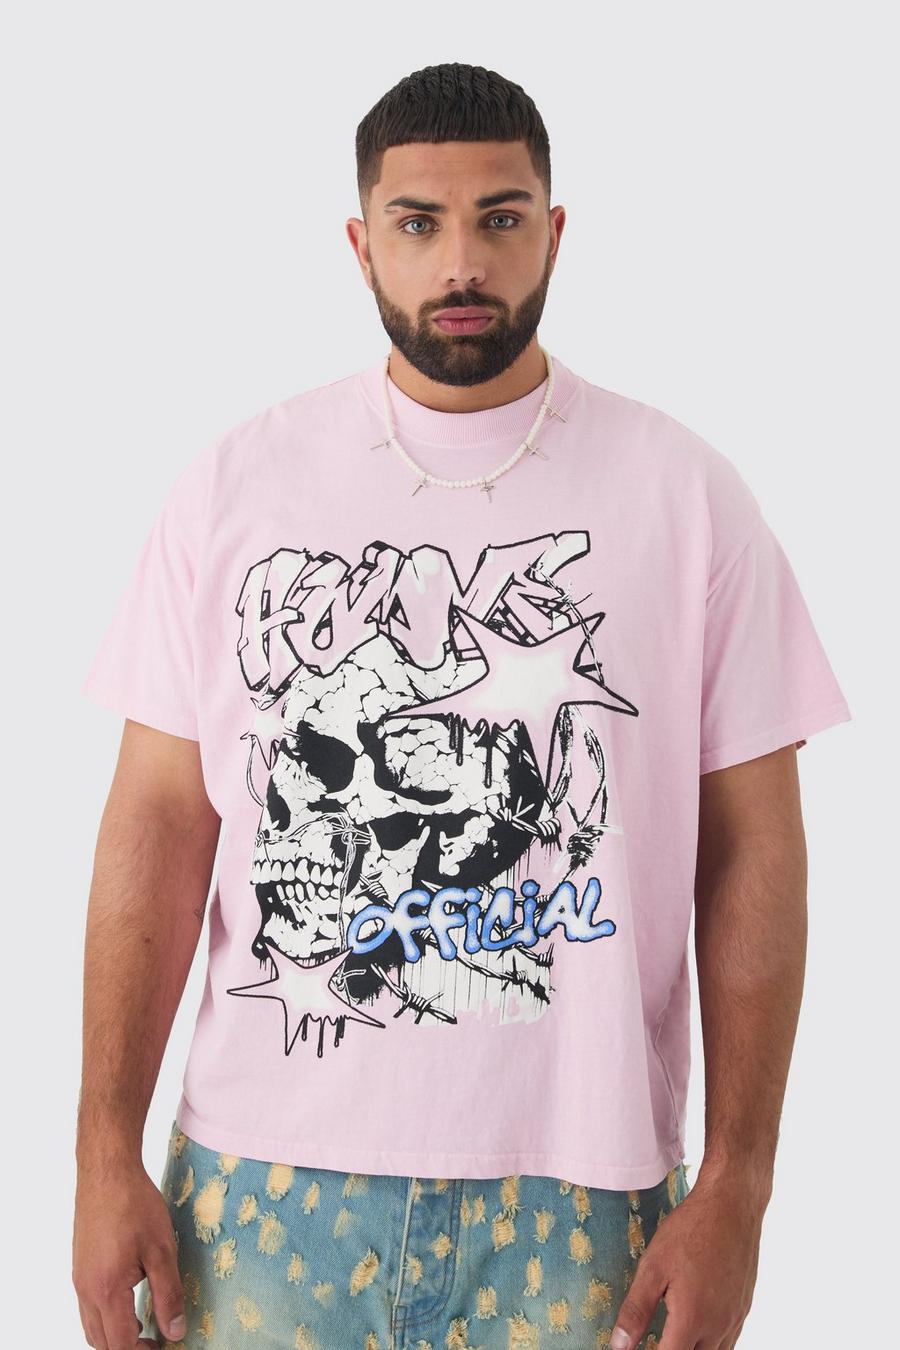 T-shirt Plus Size Homme rosa chiaro con stampa di teschio, Pink